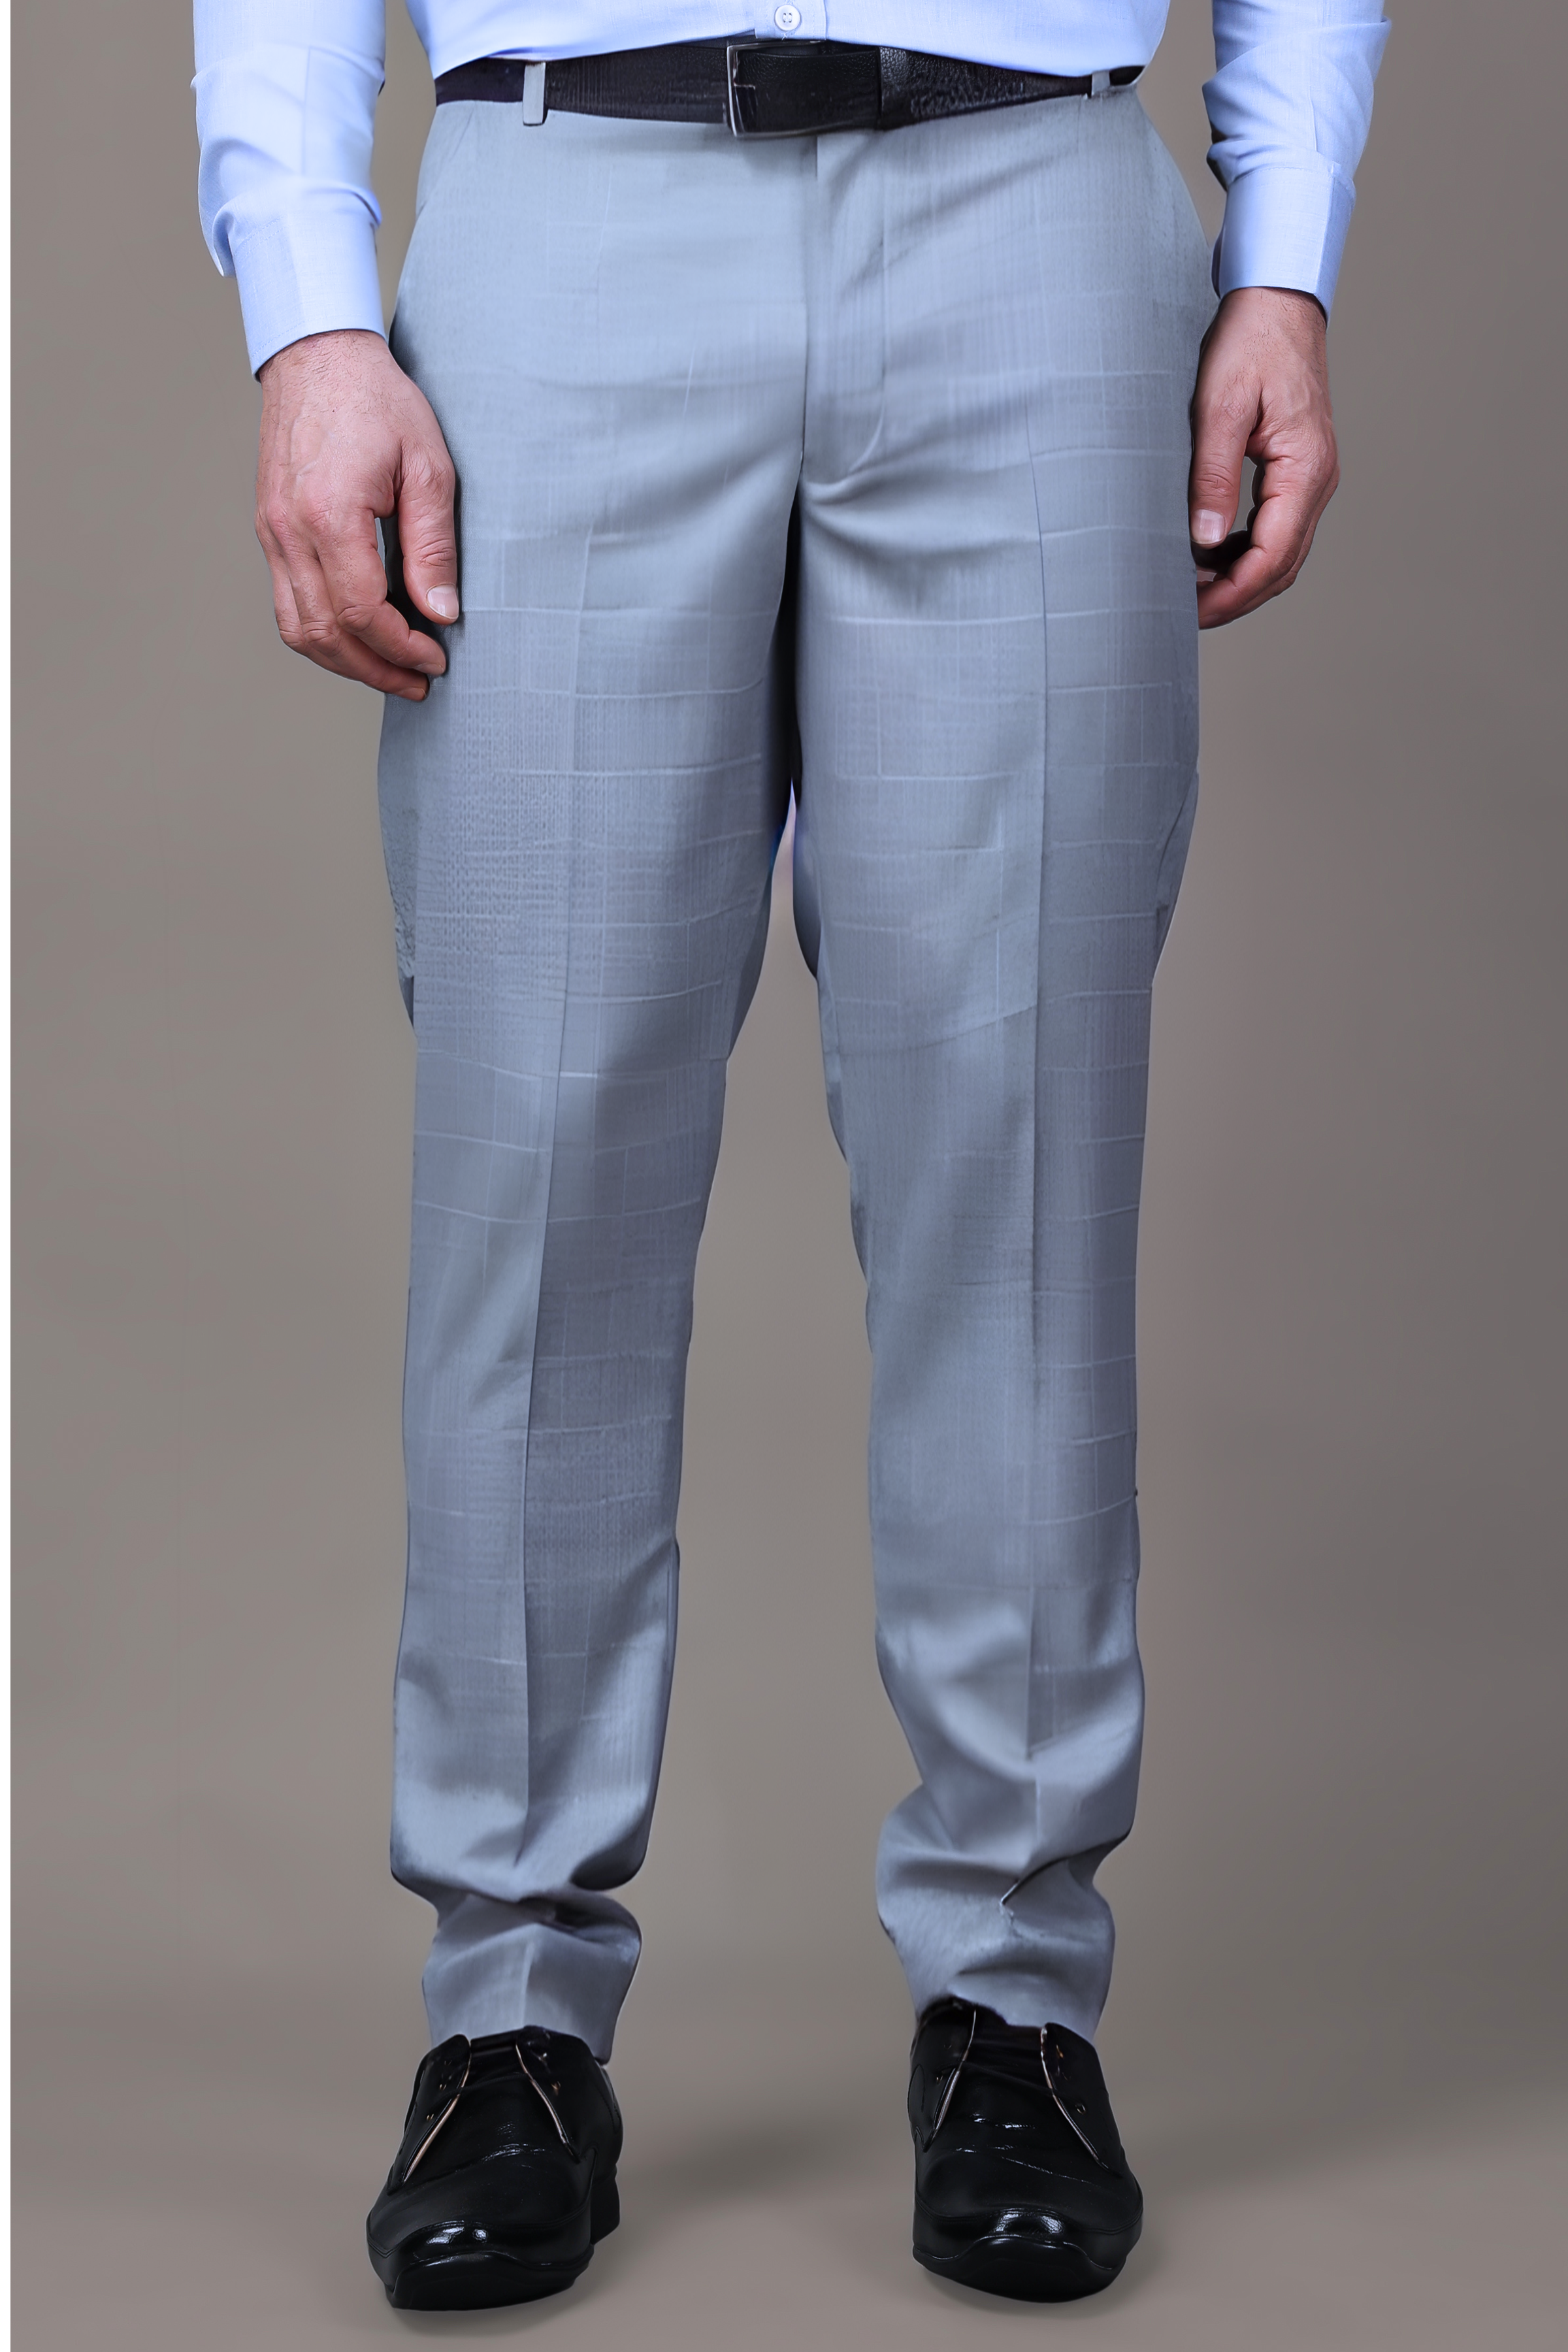 Medium Grey Check Polyester/Viscose Men Slim Fit Formal Trousers - Selling  Fast at Pantaloons.com